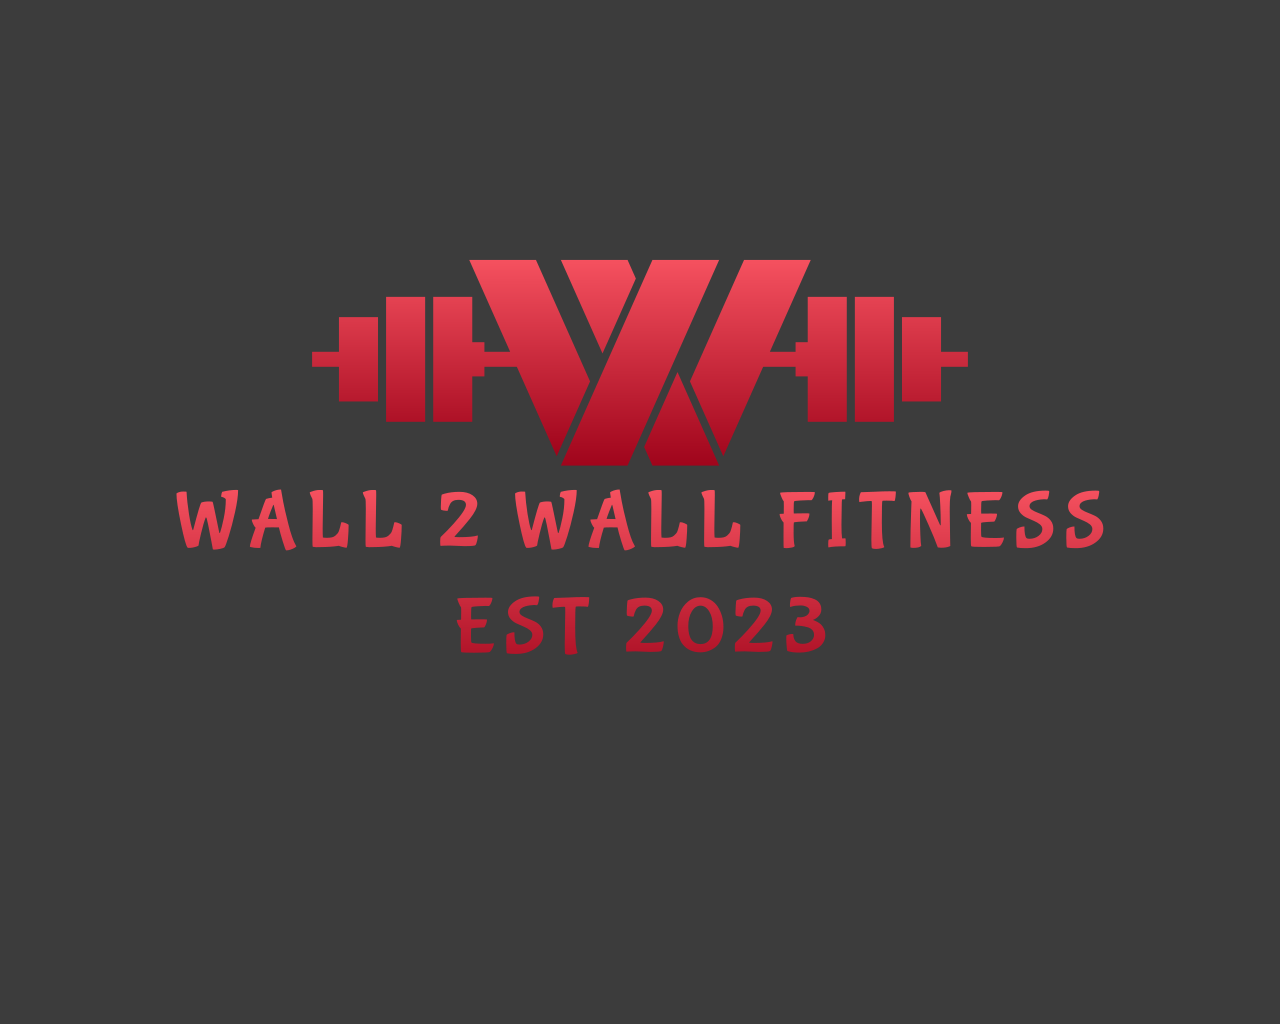 Wall 2 Wall Fitness photo